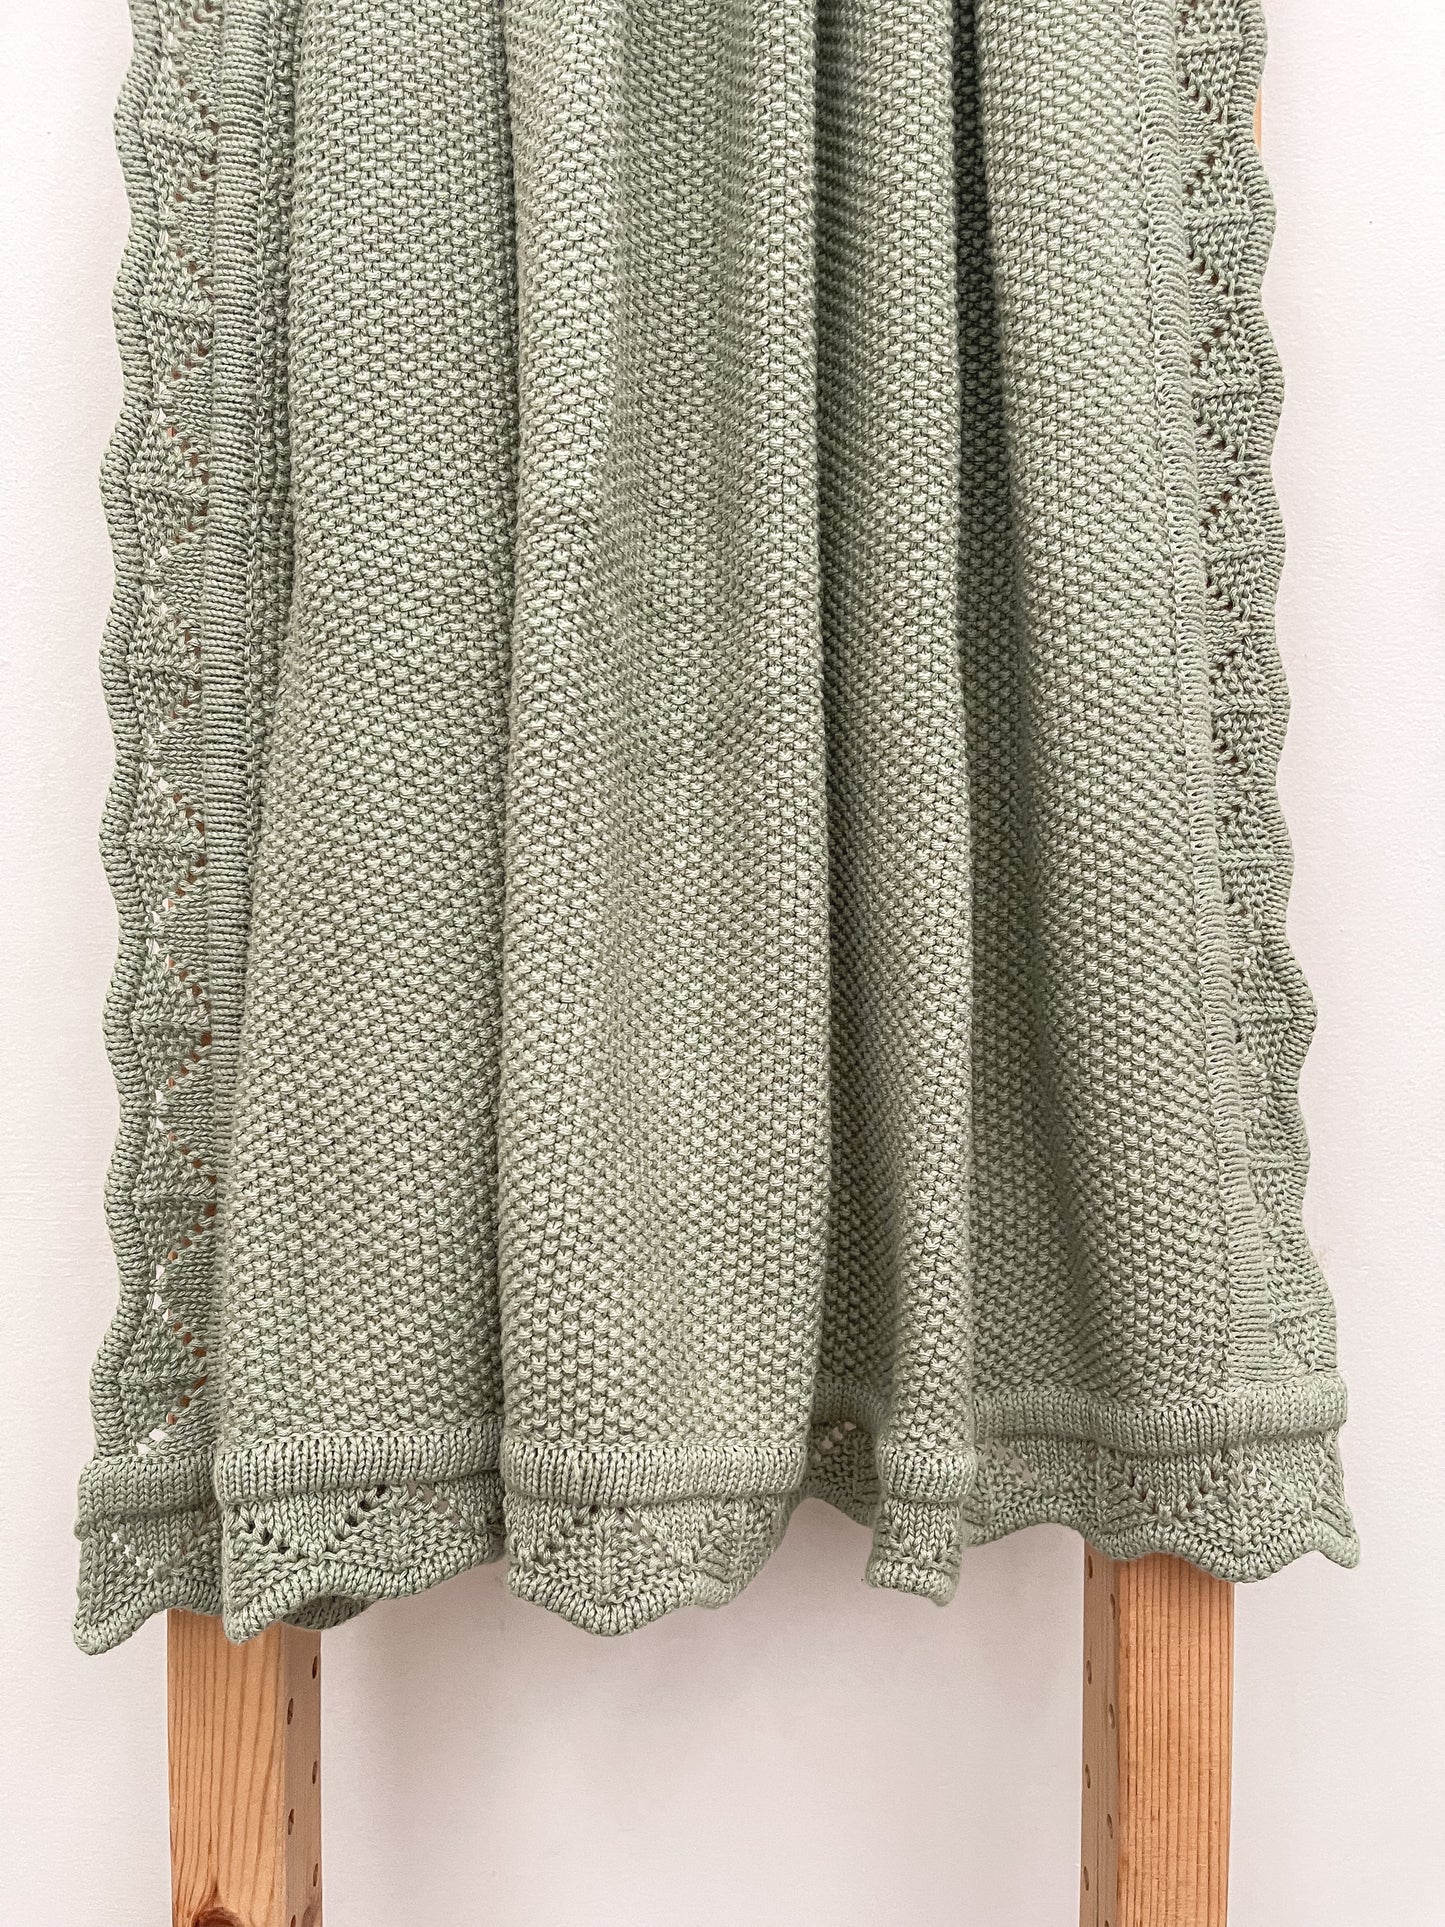 Moss Knitted Blanket